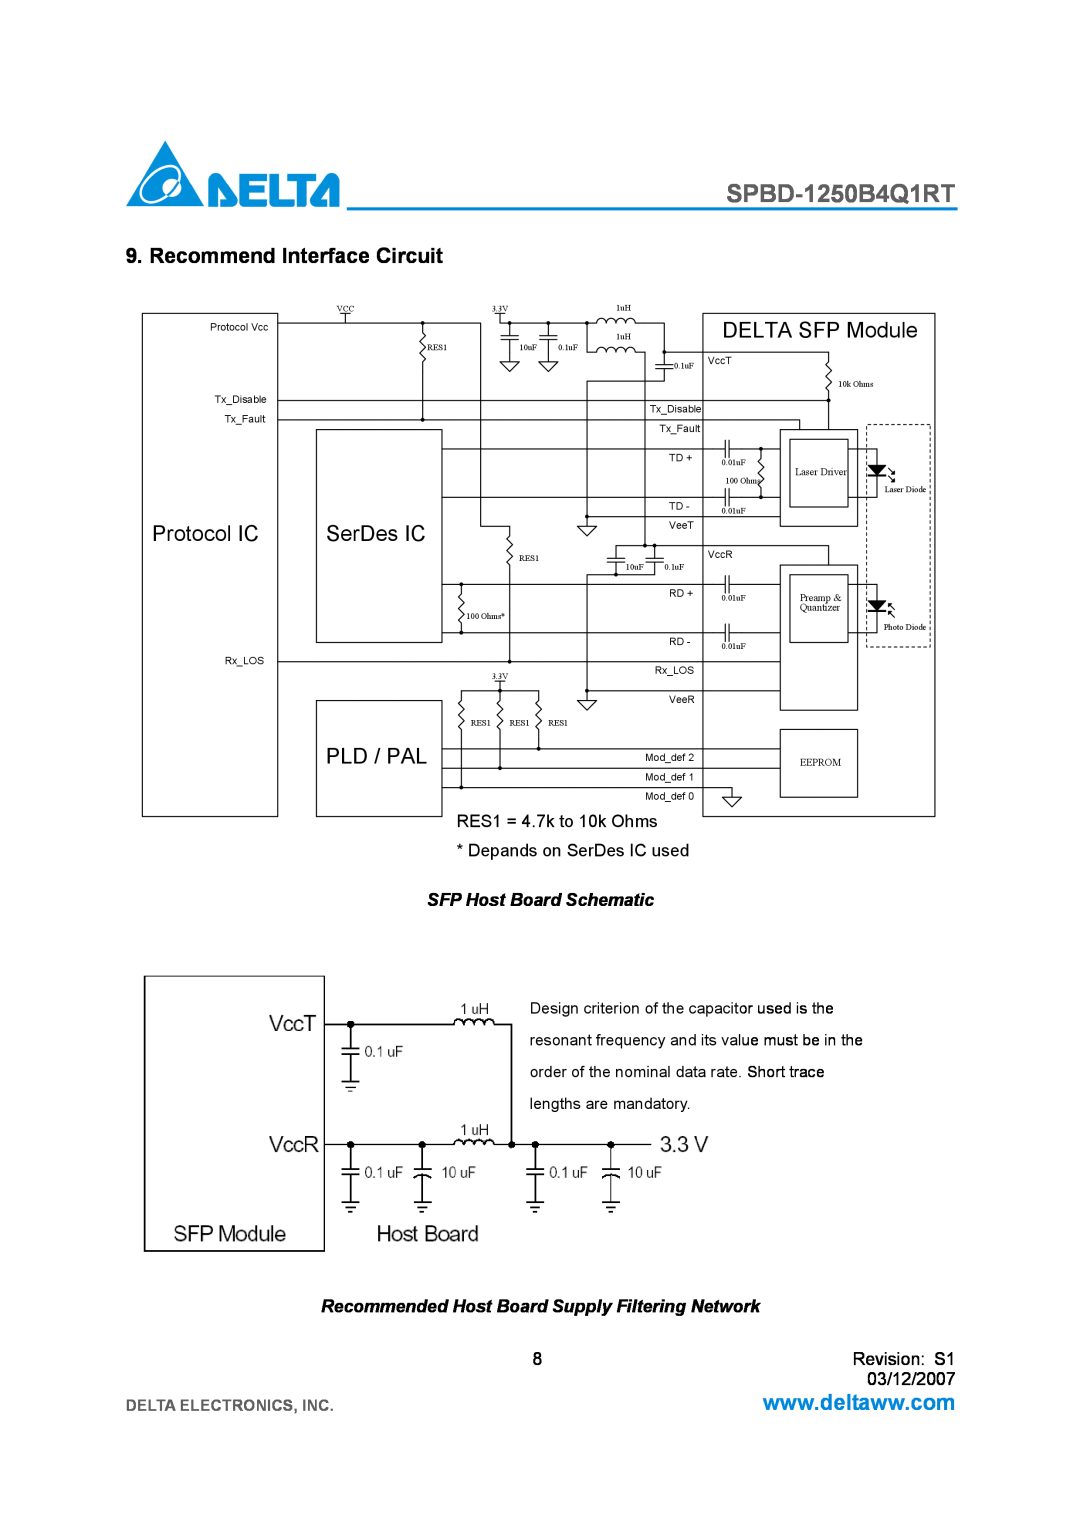 Delta Electronics SPBD-1250B4Q1RT manual SFP Host Board Schematic, Protocol IC, SerDes IC, DELTA SFP Module, Pld / Pal 